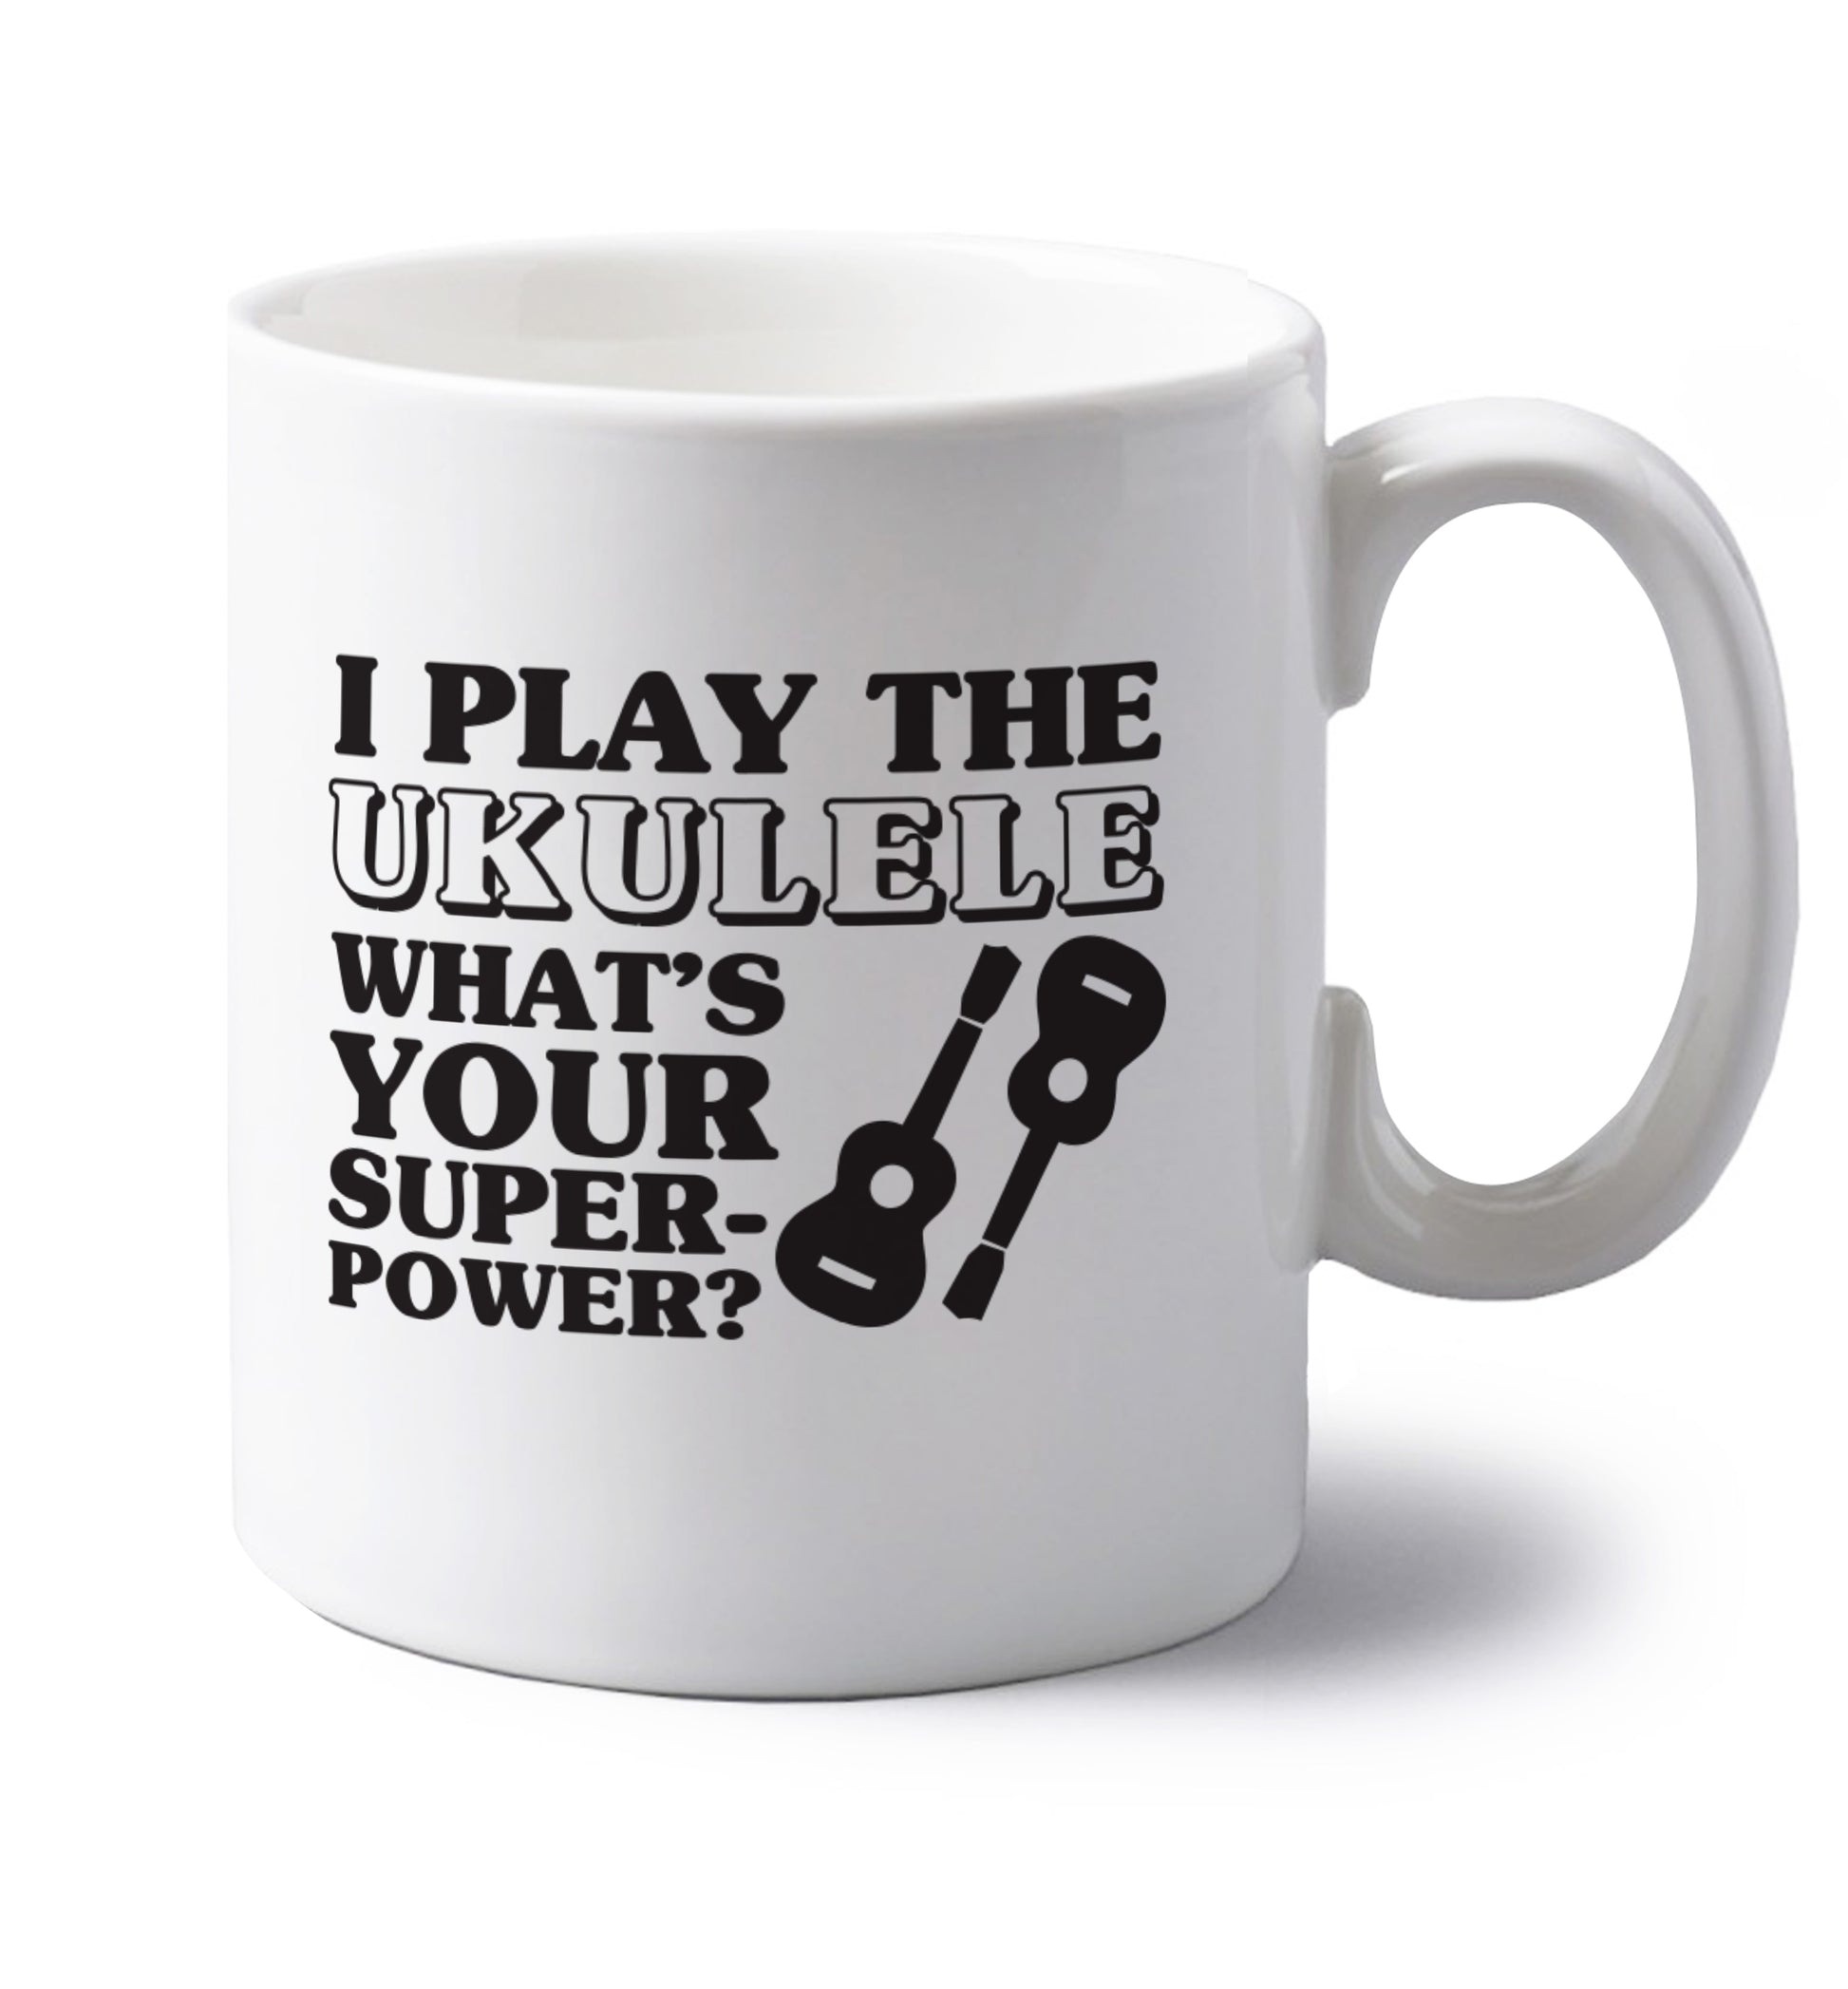 I play the ukulele what's your superpower? left handed white ceramic mug 